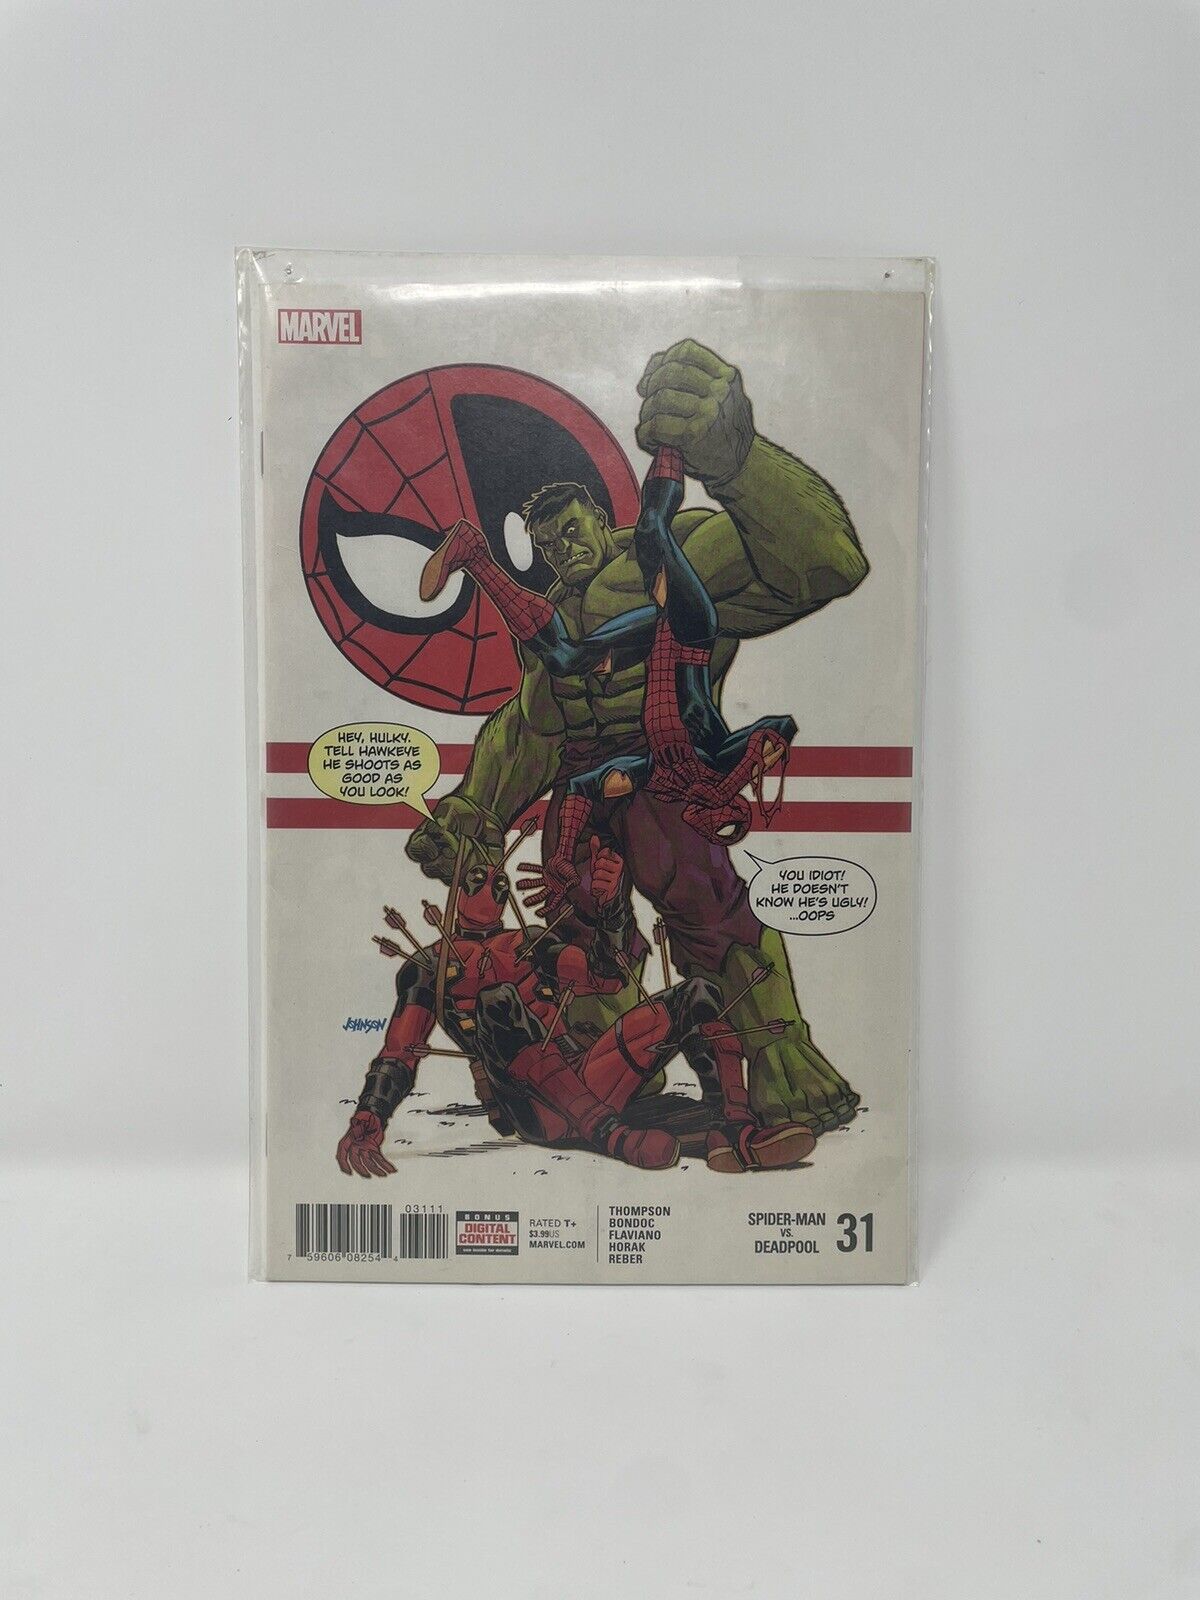 Spider-Man VS Deadpool #31 Marvel Comics